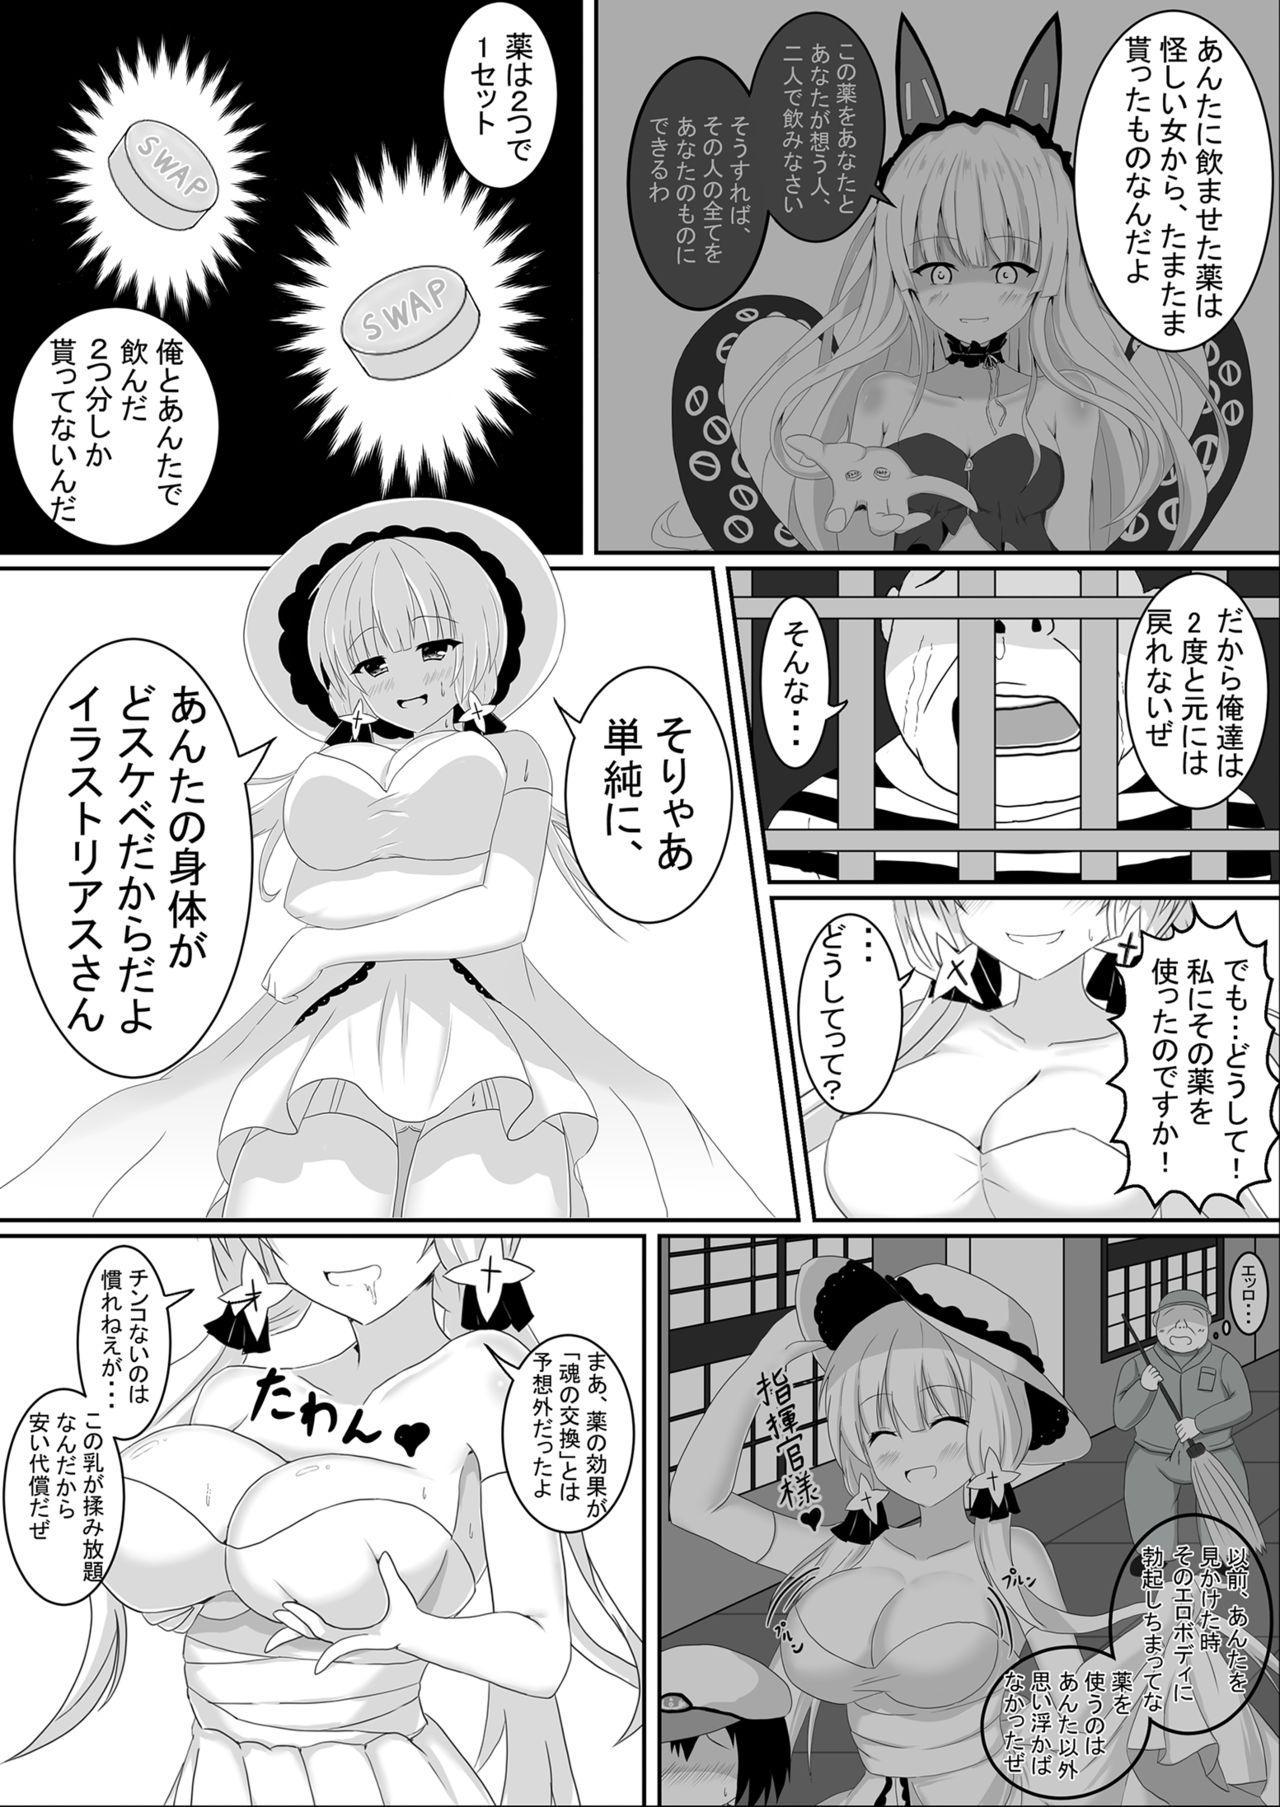 Solo Girl Irekawari, Hyoui E Fukusuumai 3 - Azur lane Moreno - Page 5